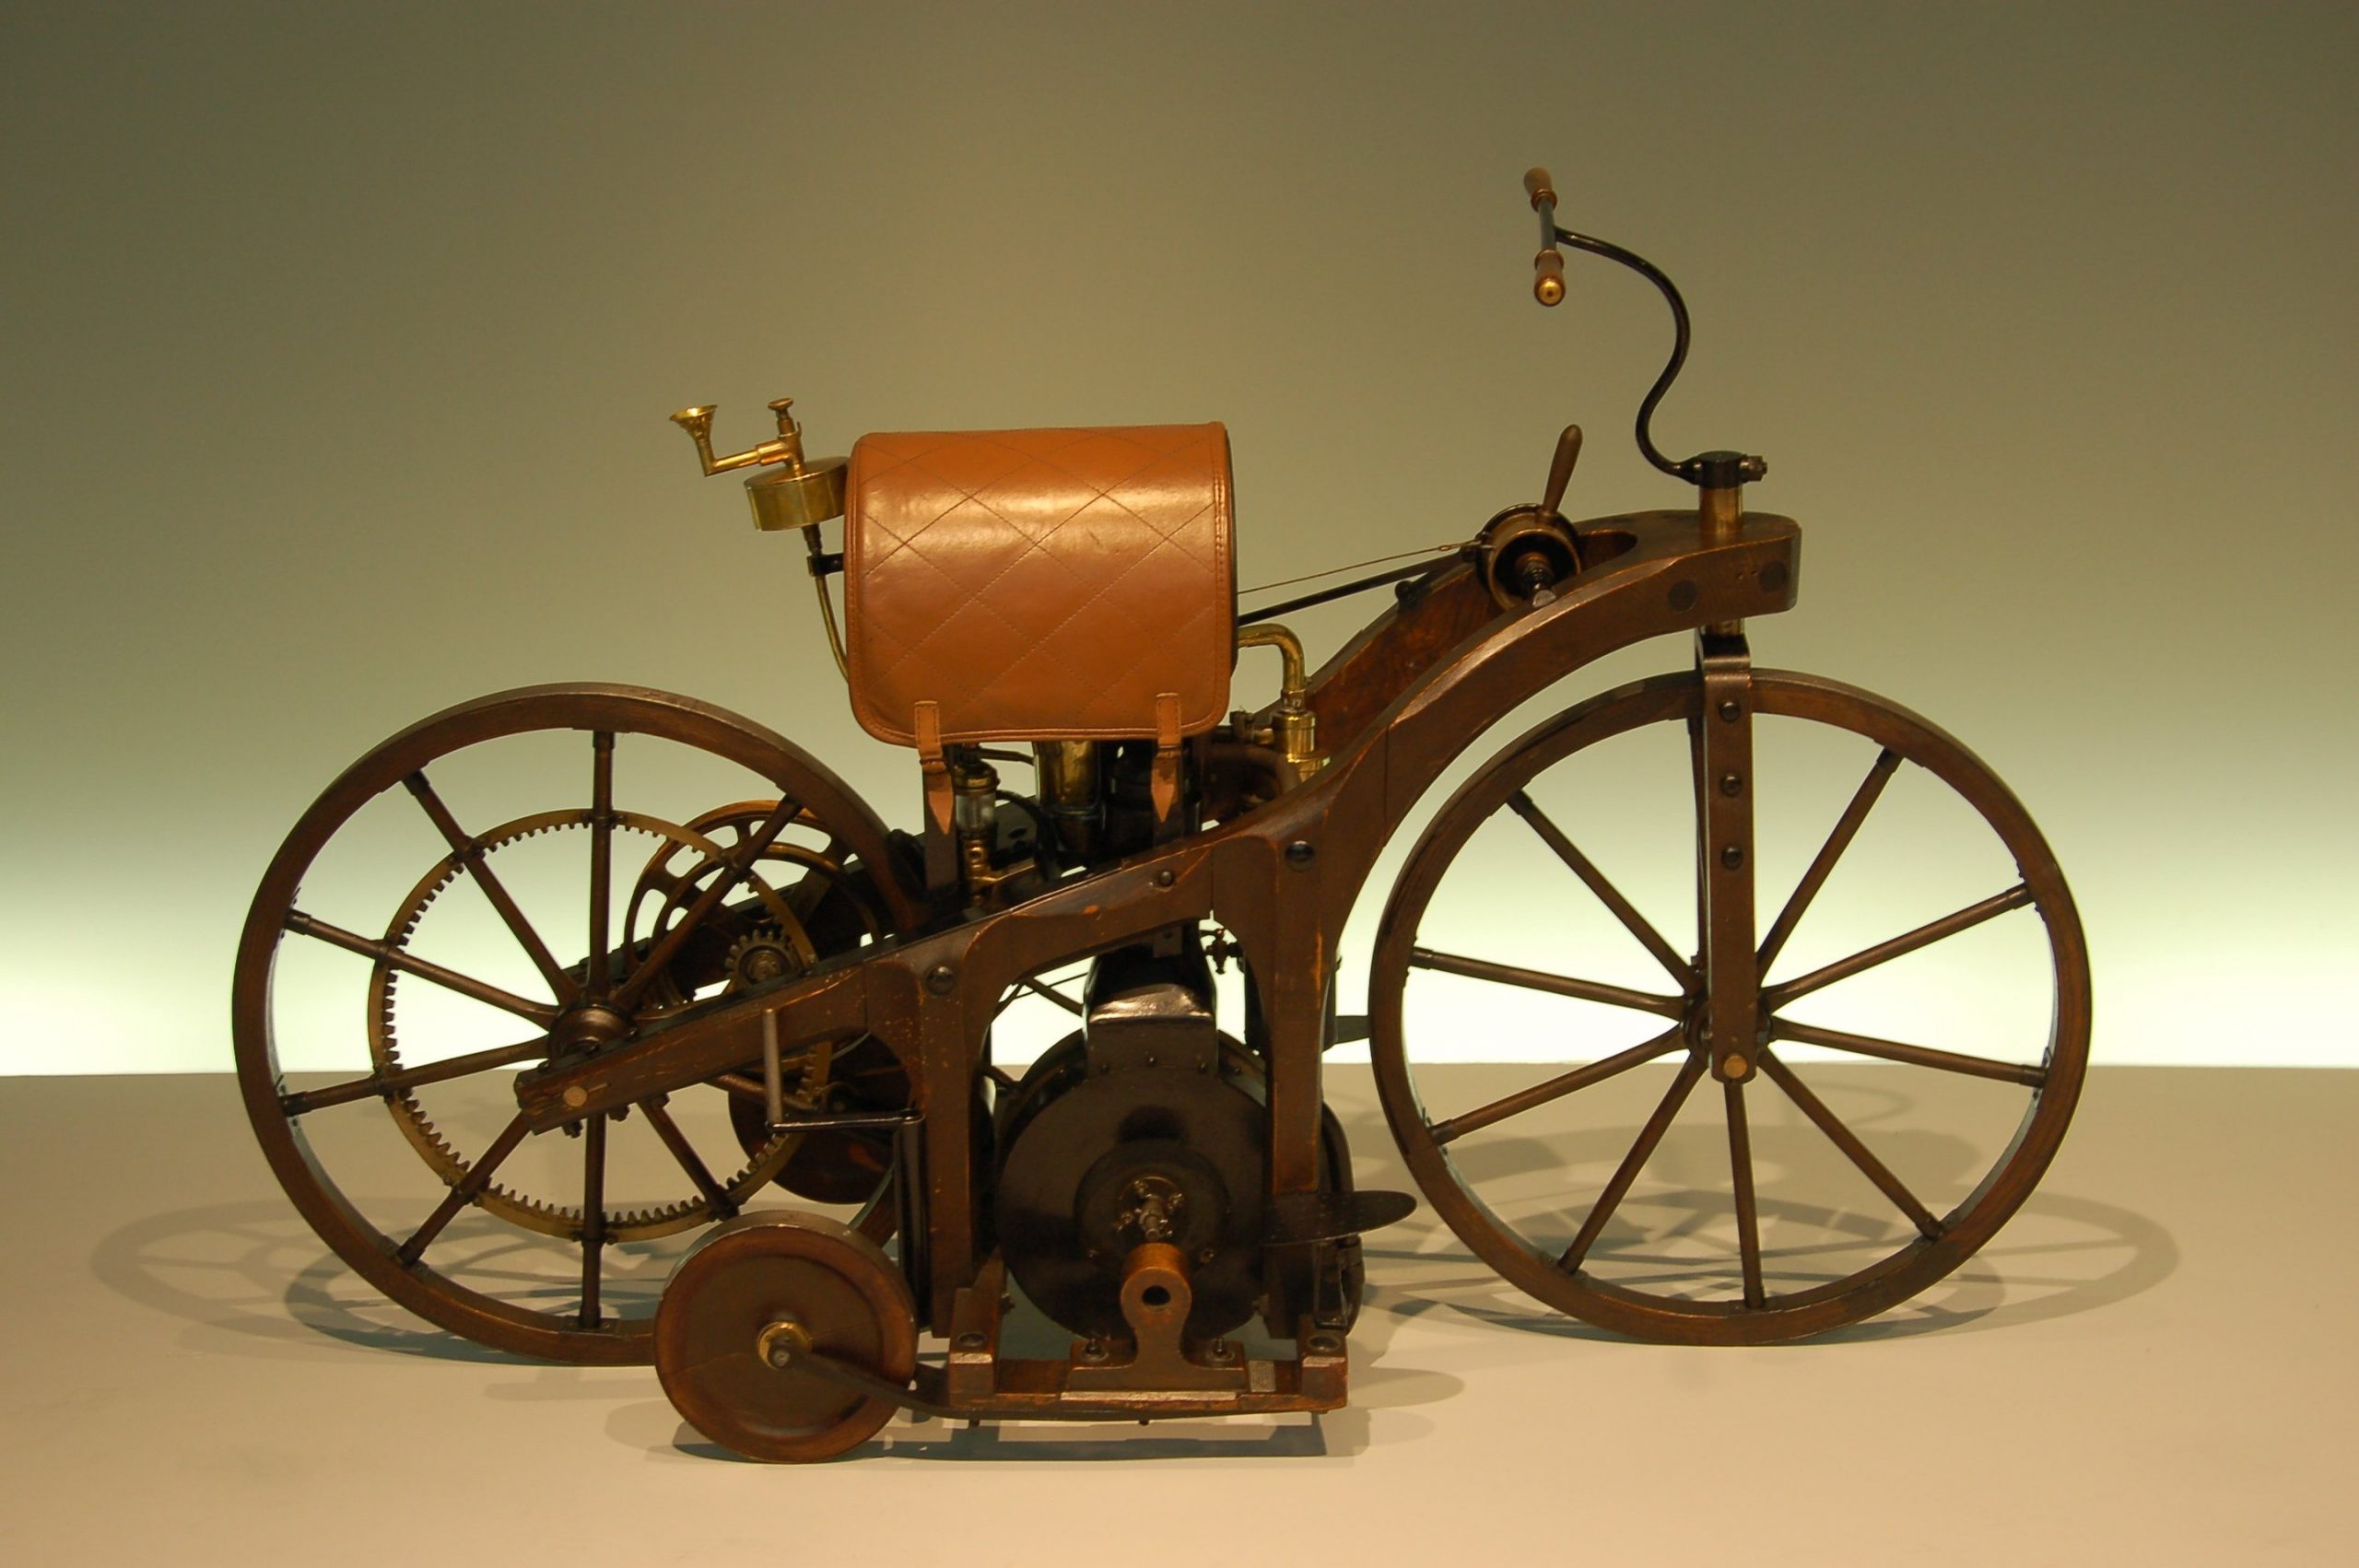 1885 Reitwagen internal combustion motorcycle on display in exhibit